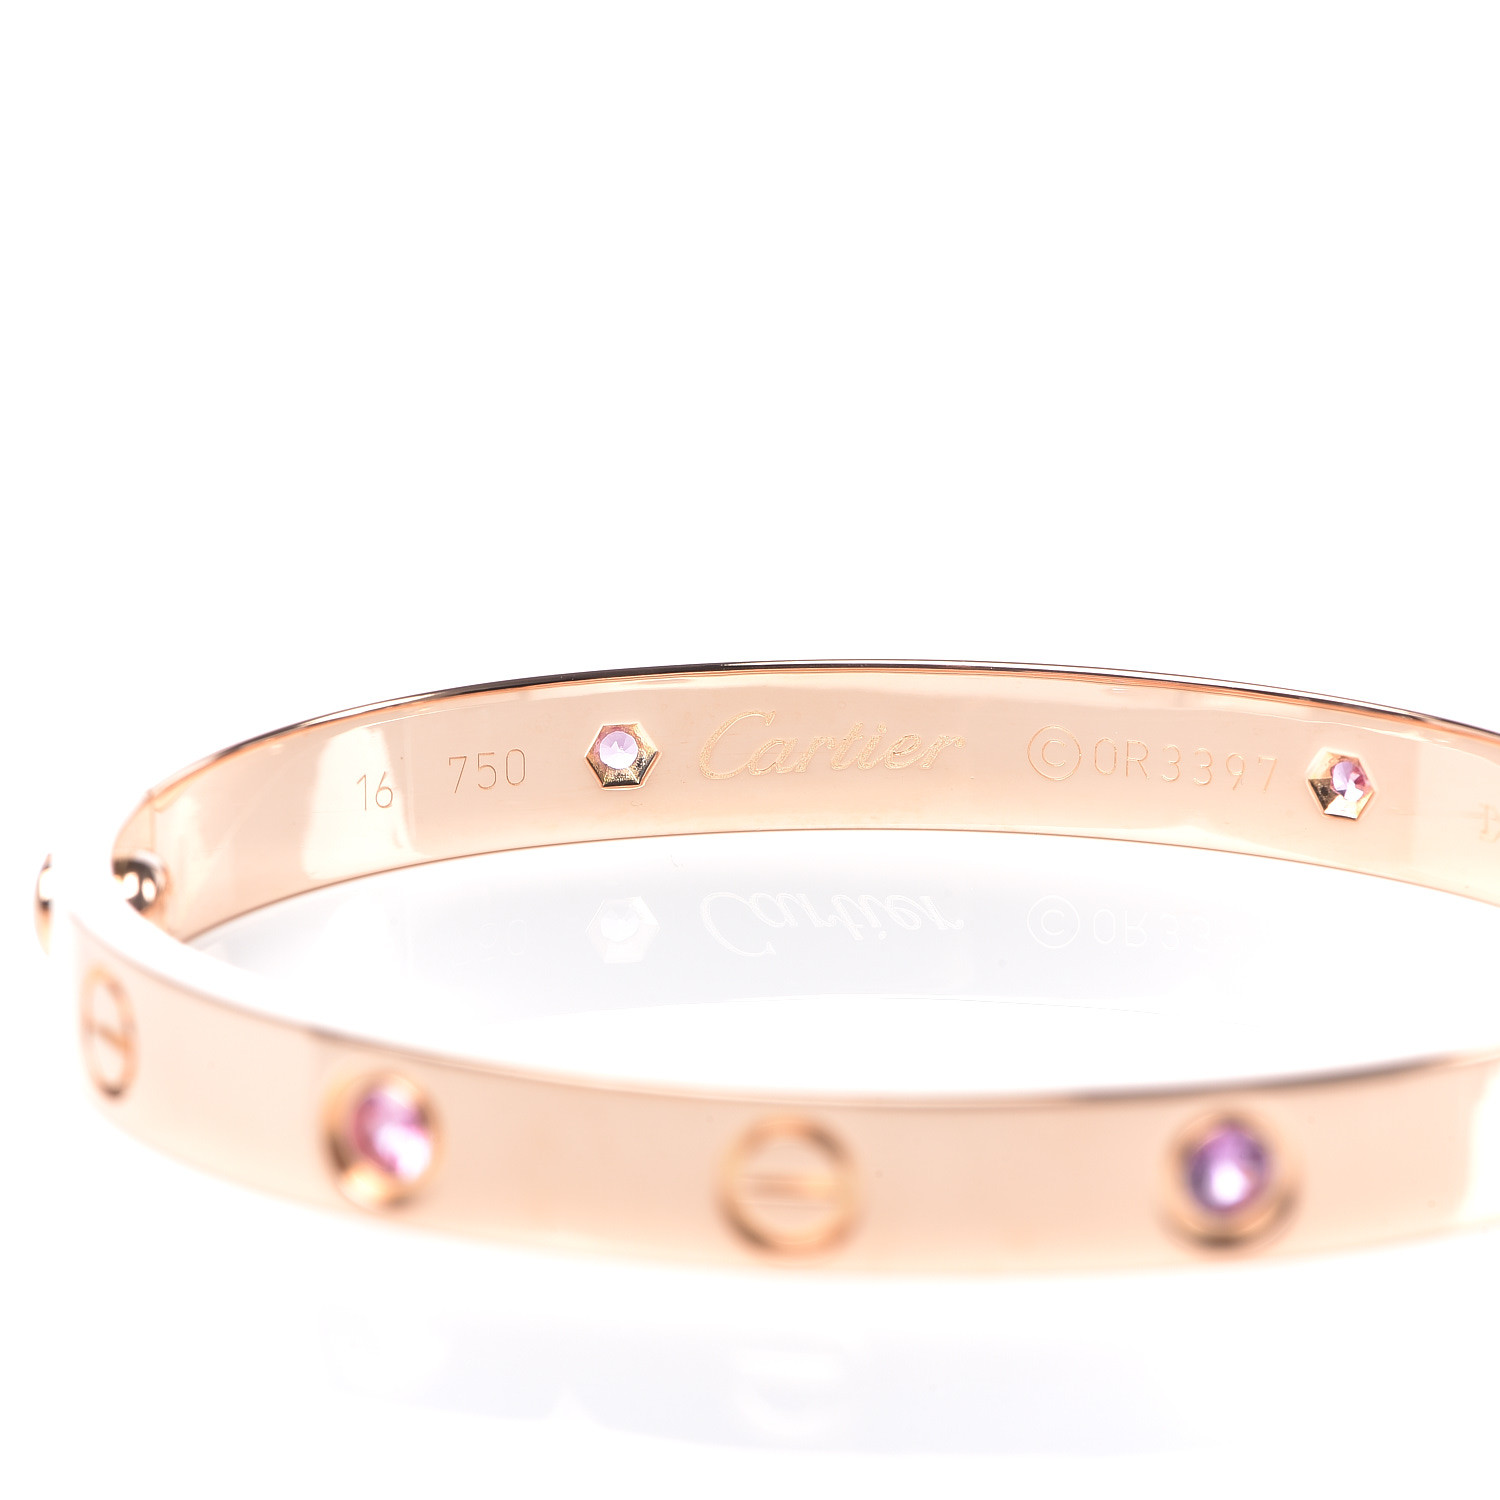 cartier love bracelet with sapphires